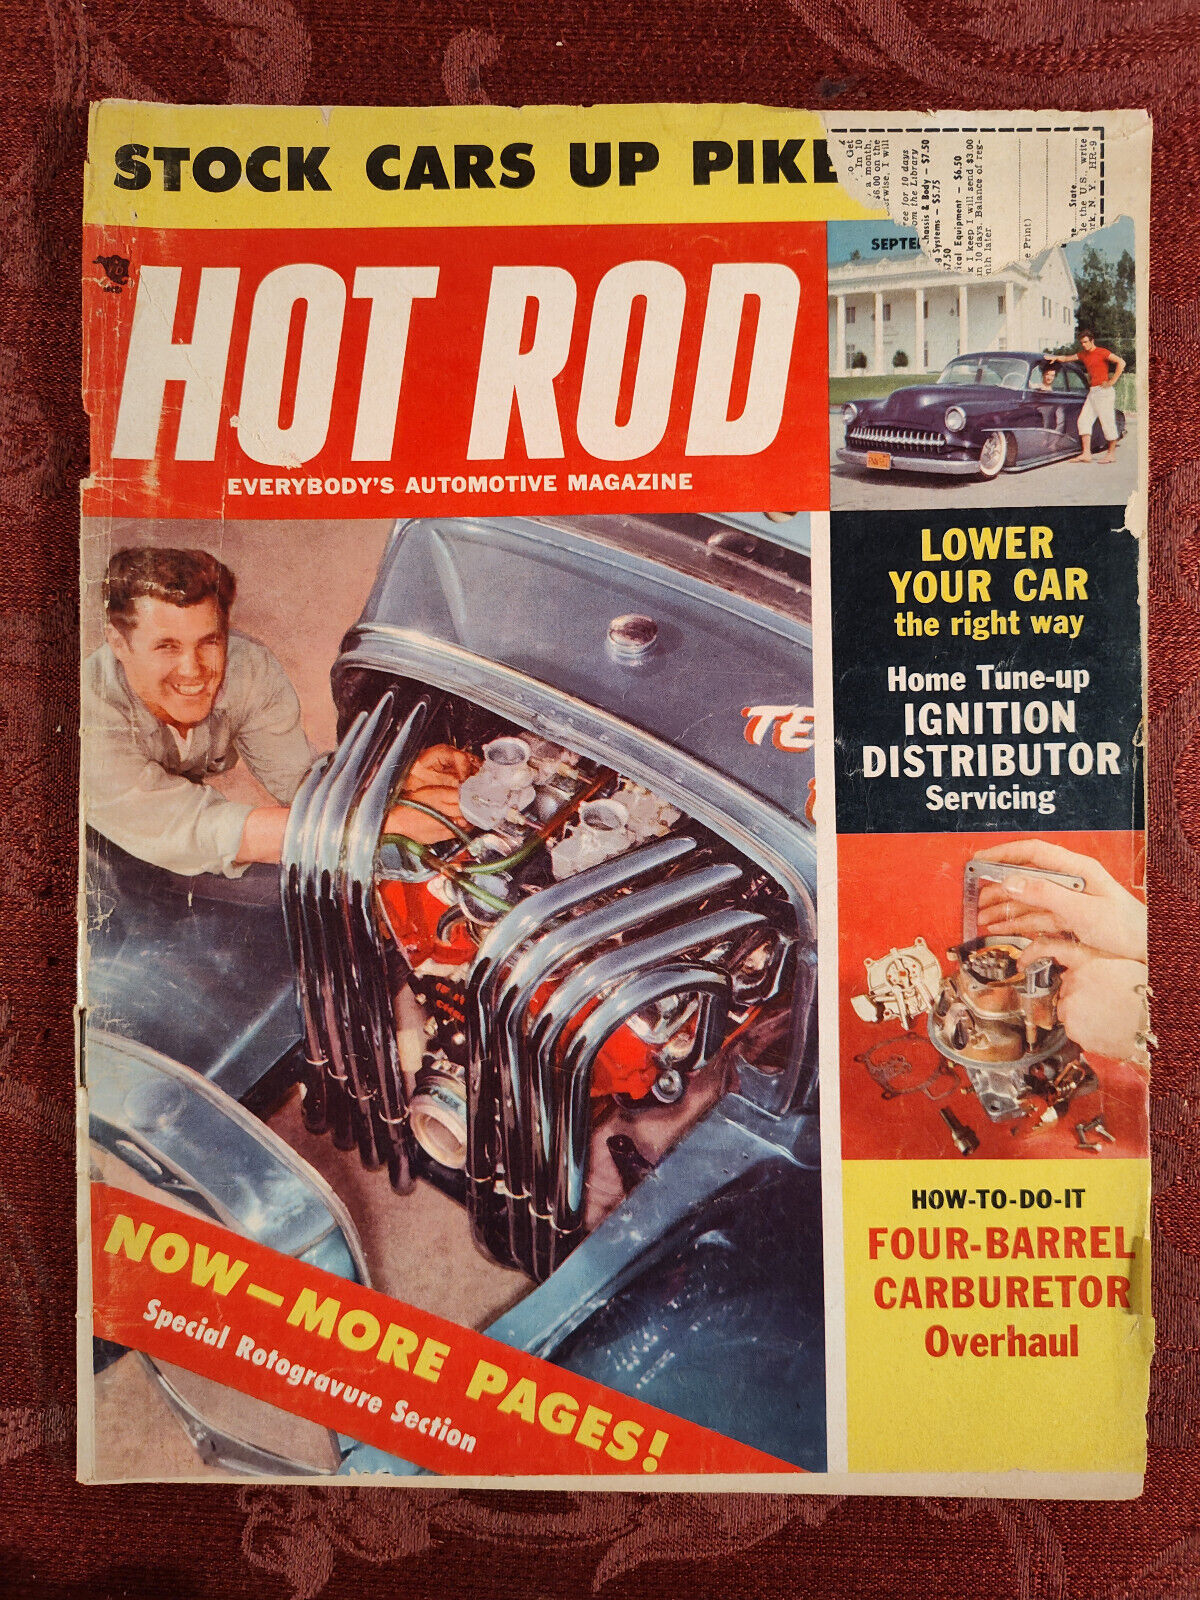 RARE HOT ROD Magazine September 1957 Stock Cars Lincoln powered Model A